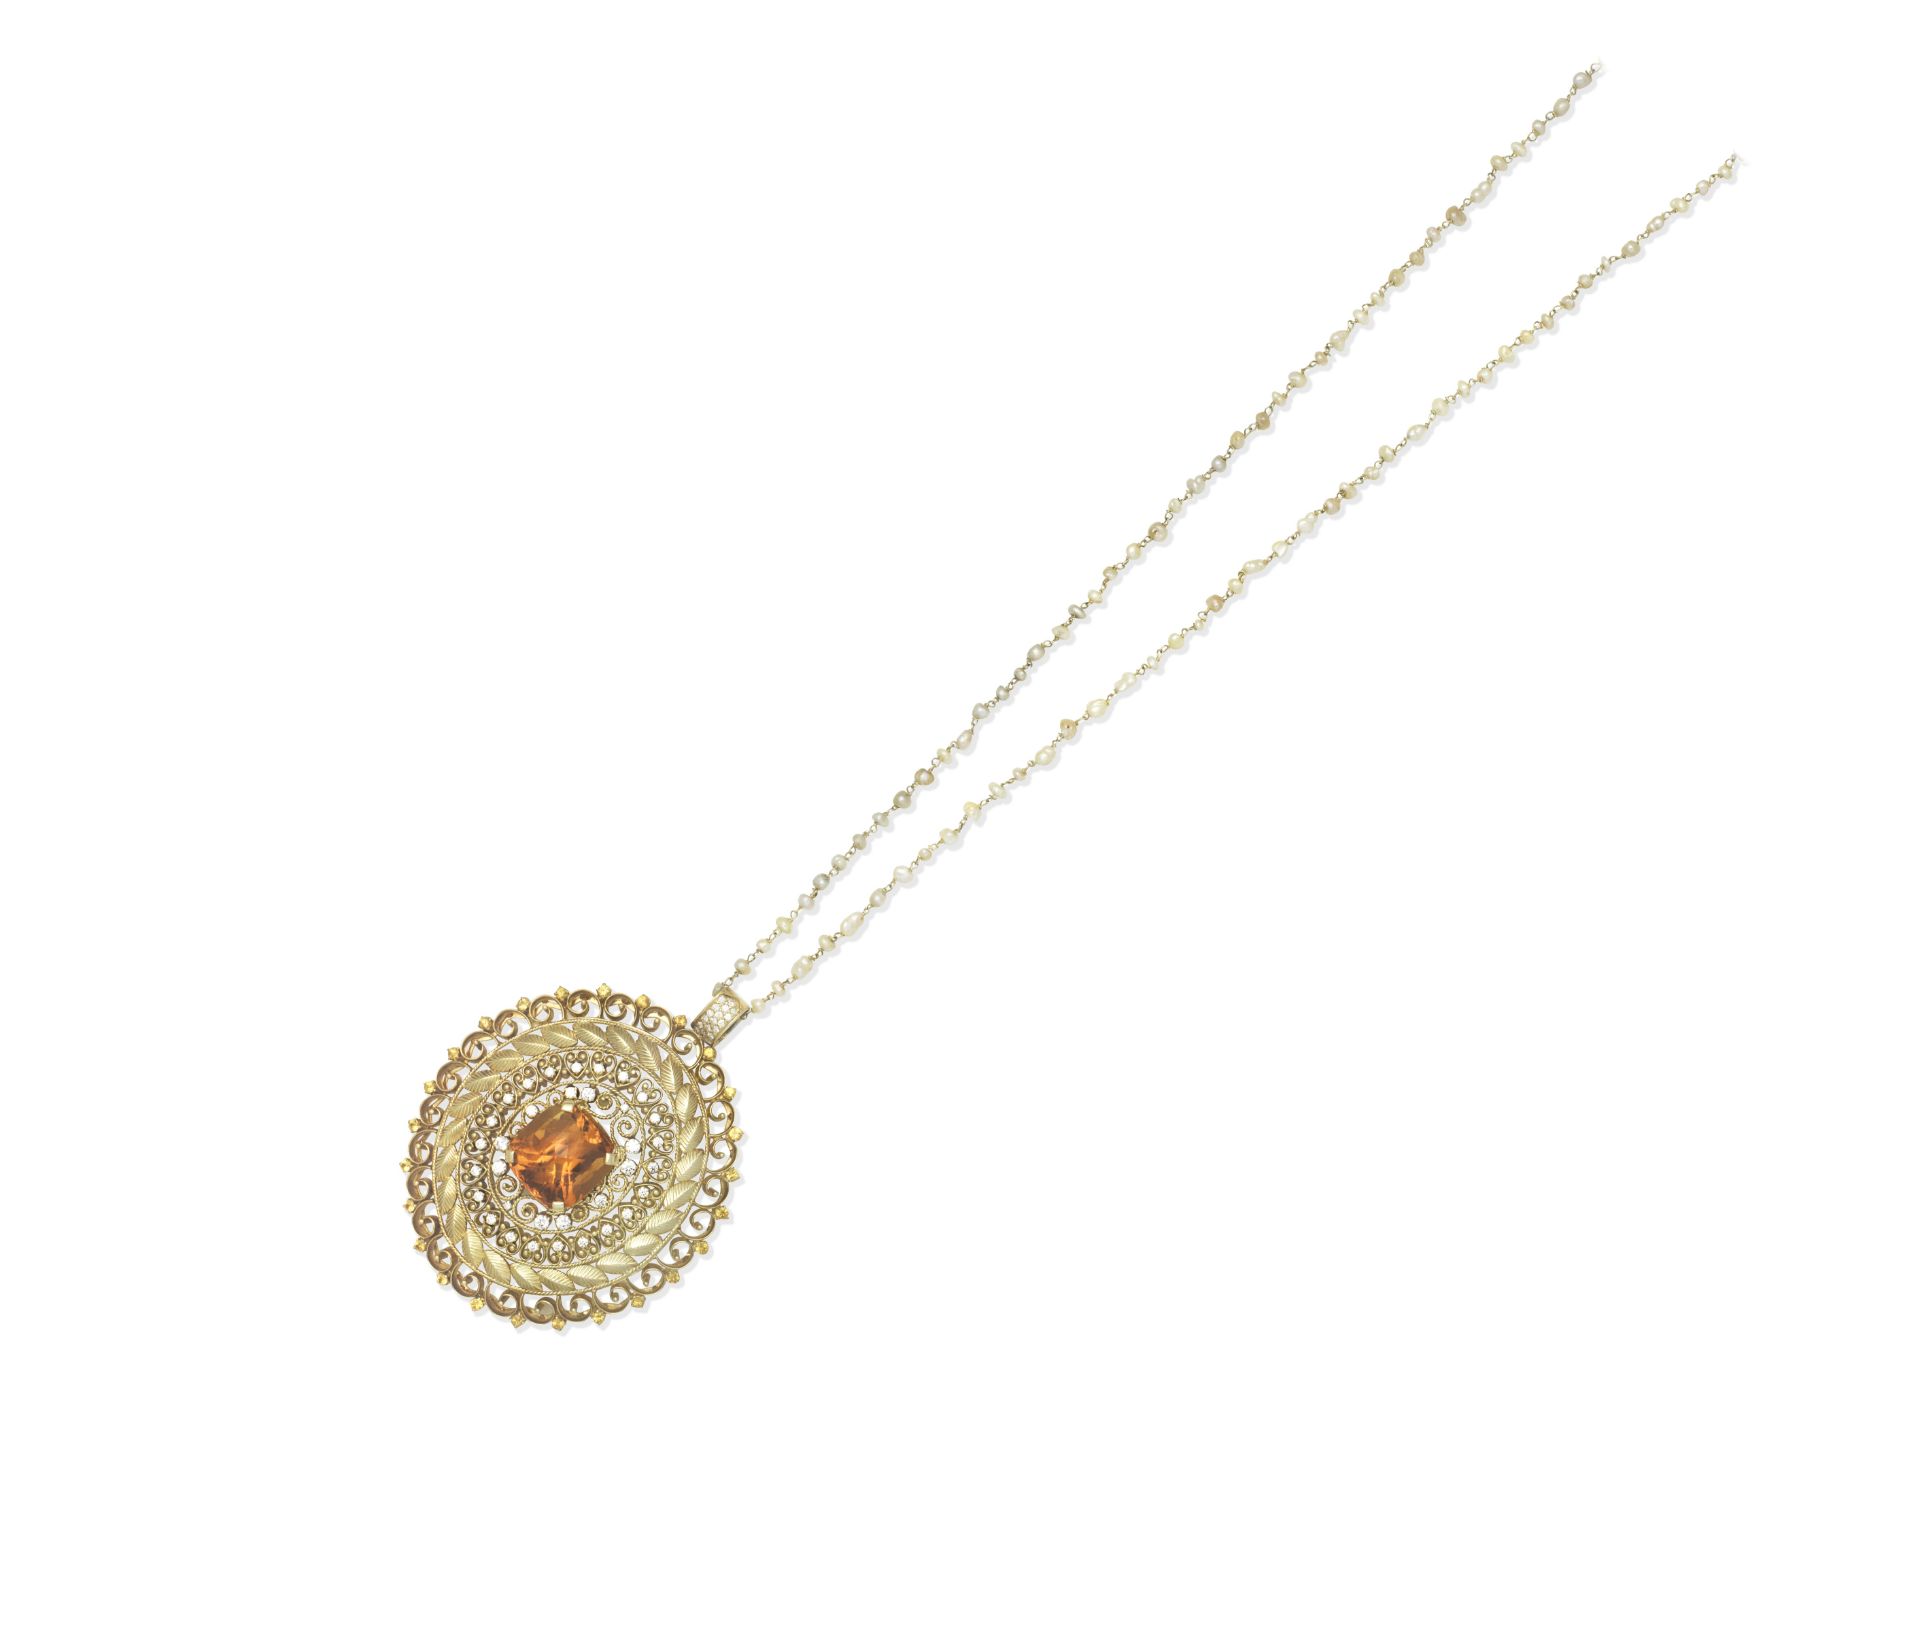 Citrine, pearl and diamond pendant necklace